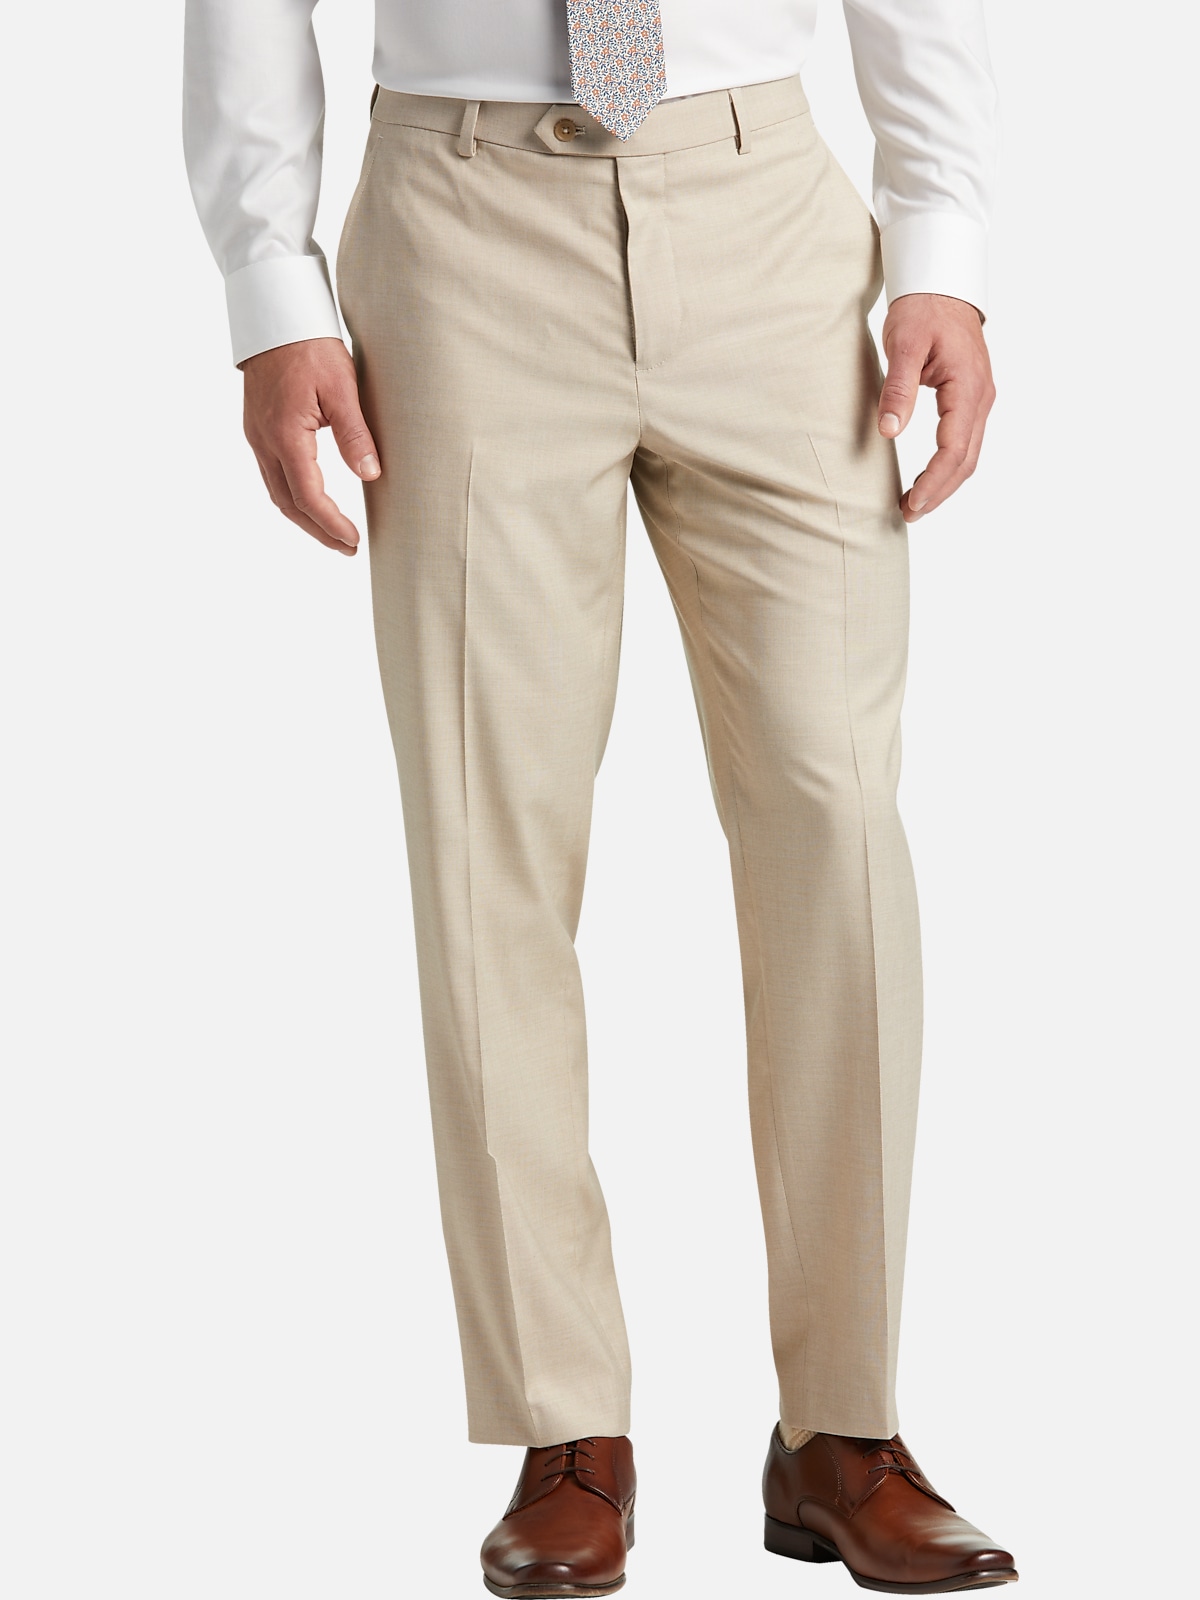 Shop Mens Semi Formal Pants online